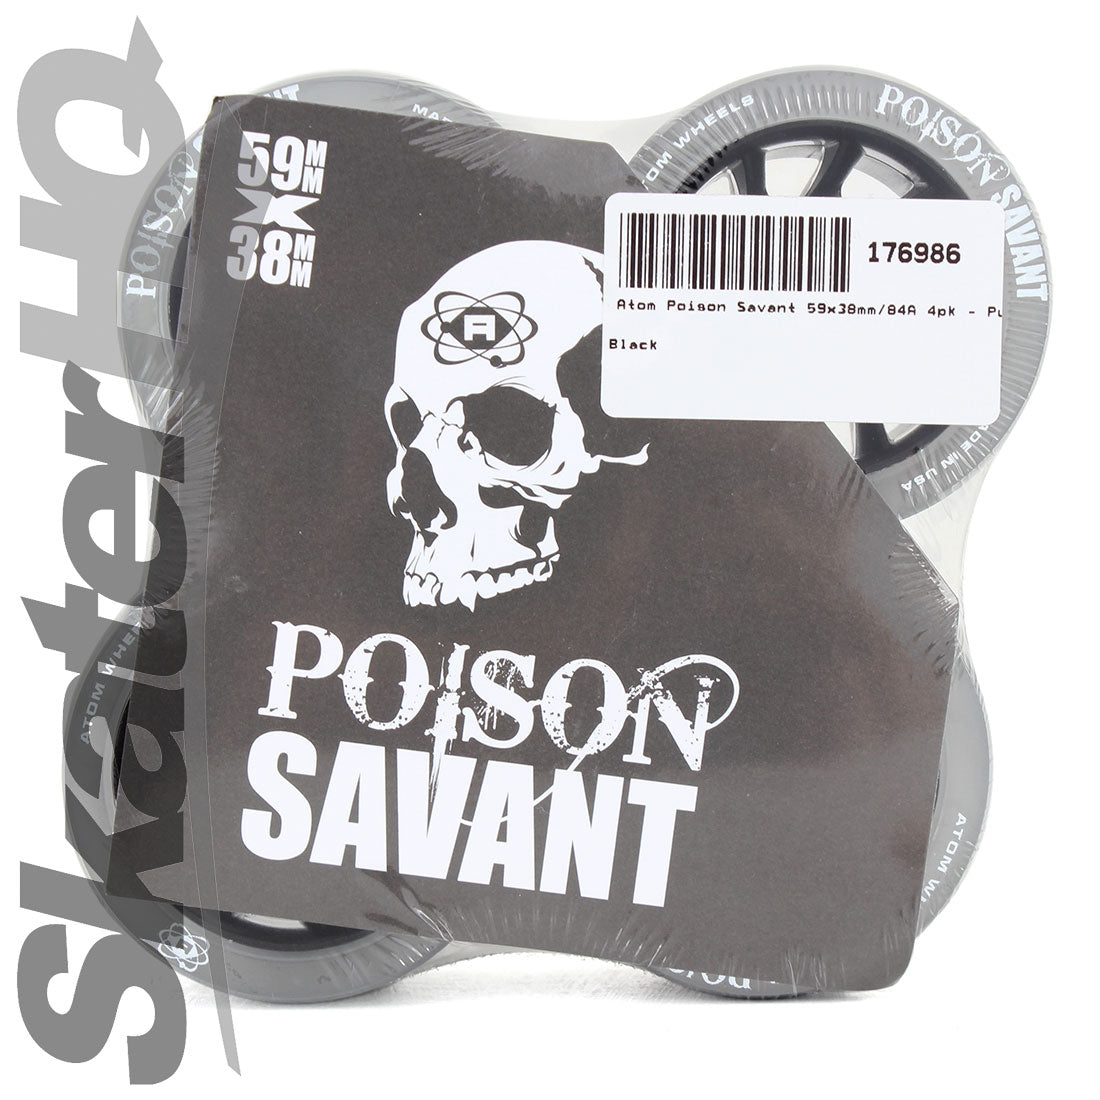 Atom Poison Savant 59x38mm/84A 4pk - Black Roller Skate Wheels